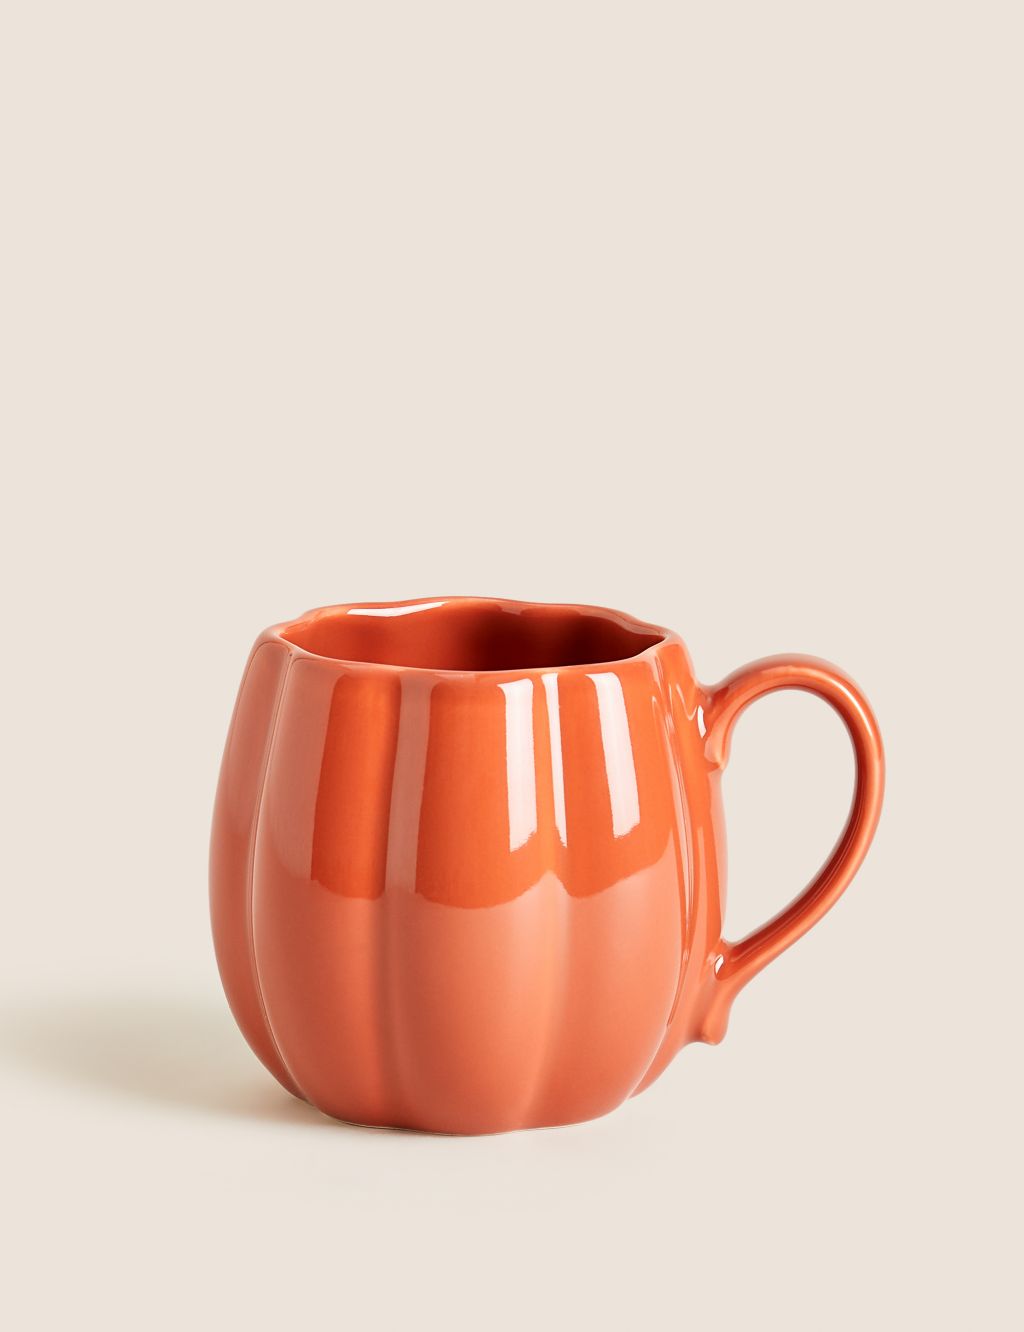 Pumpkin Mug image 1